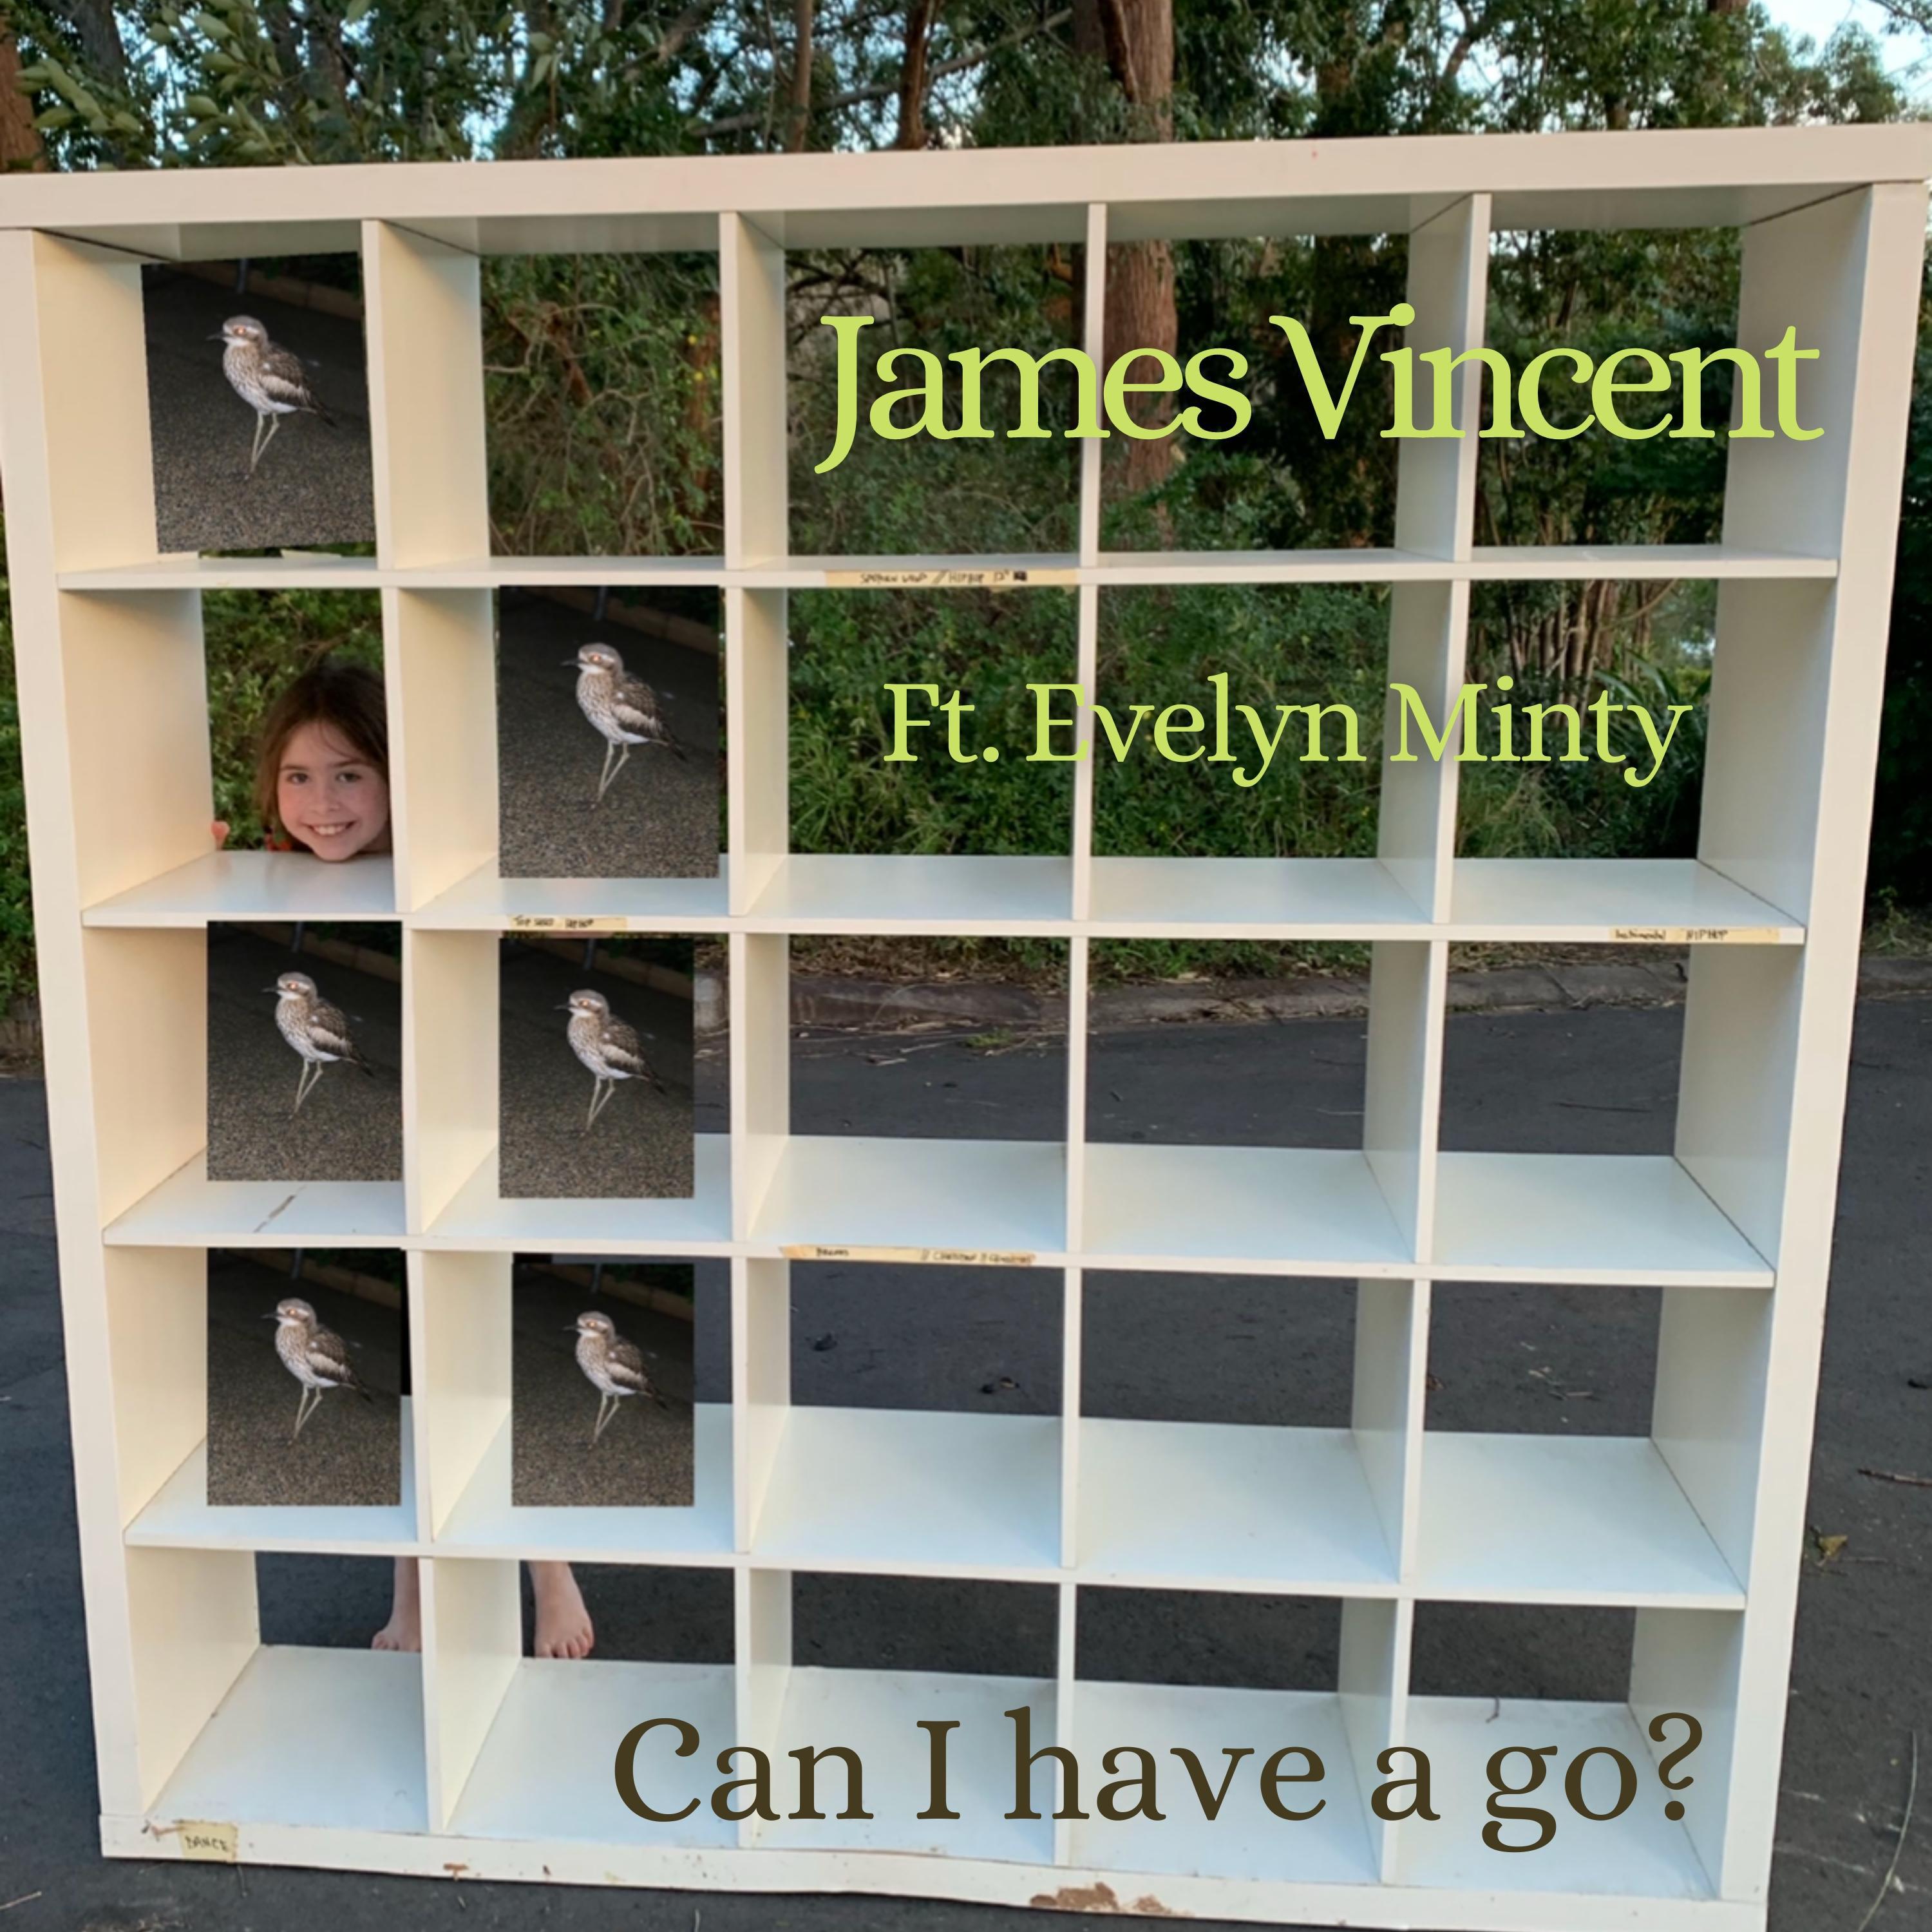 James Vincent - Can I have a go?